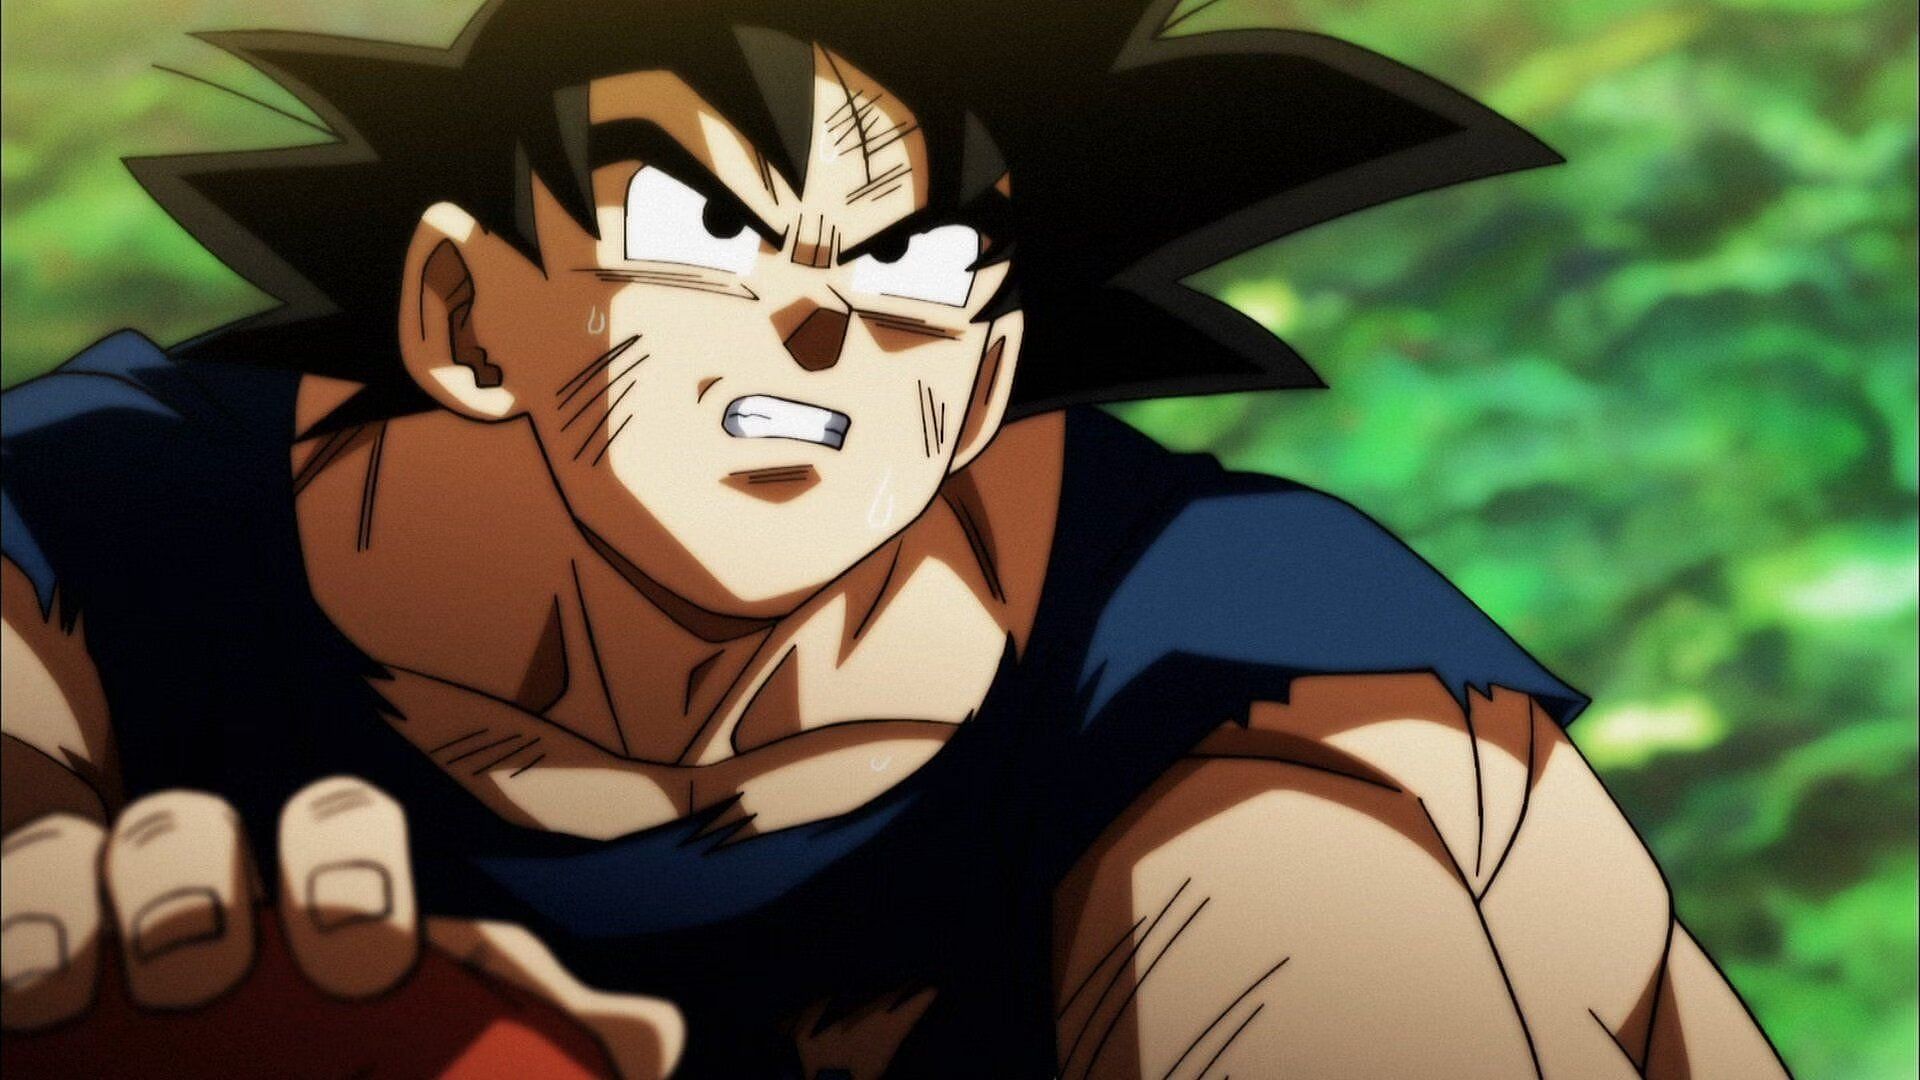 Goku in the Dragon Ball Super anime (Image via Toei Animation).